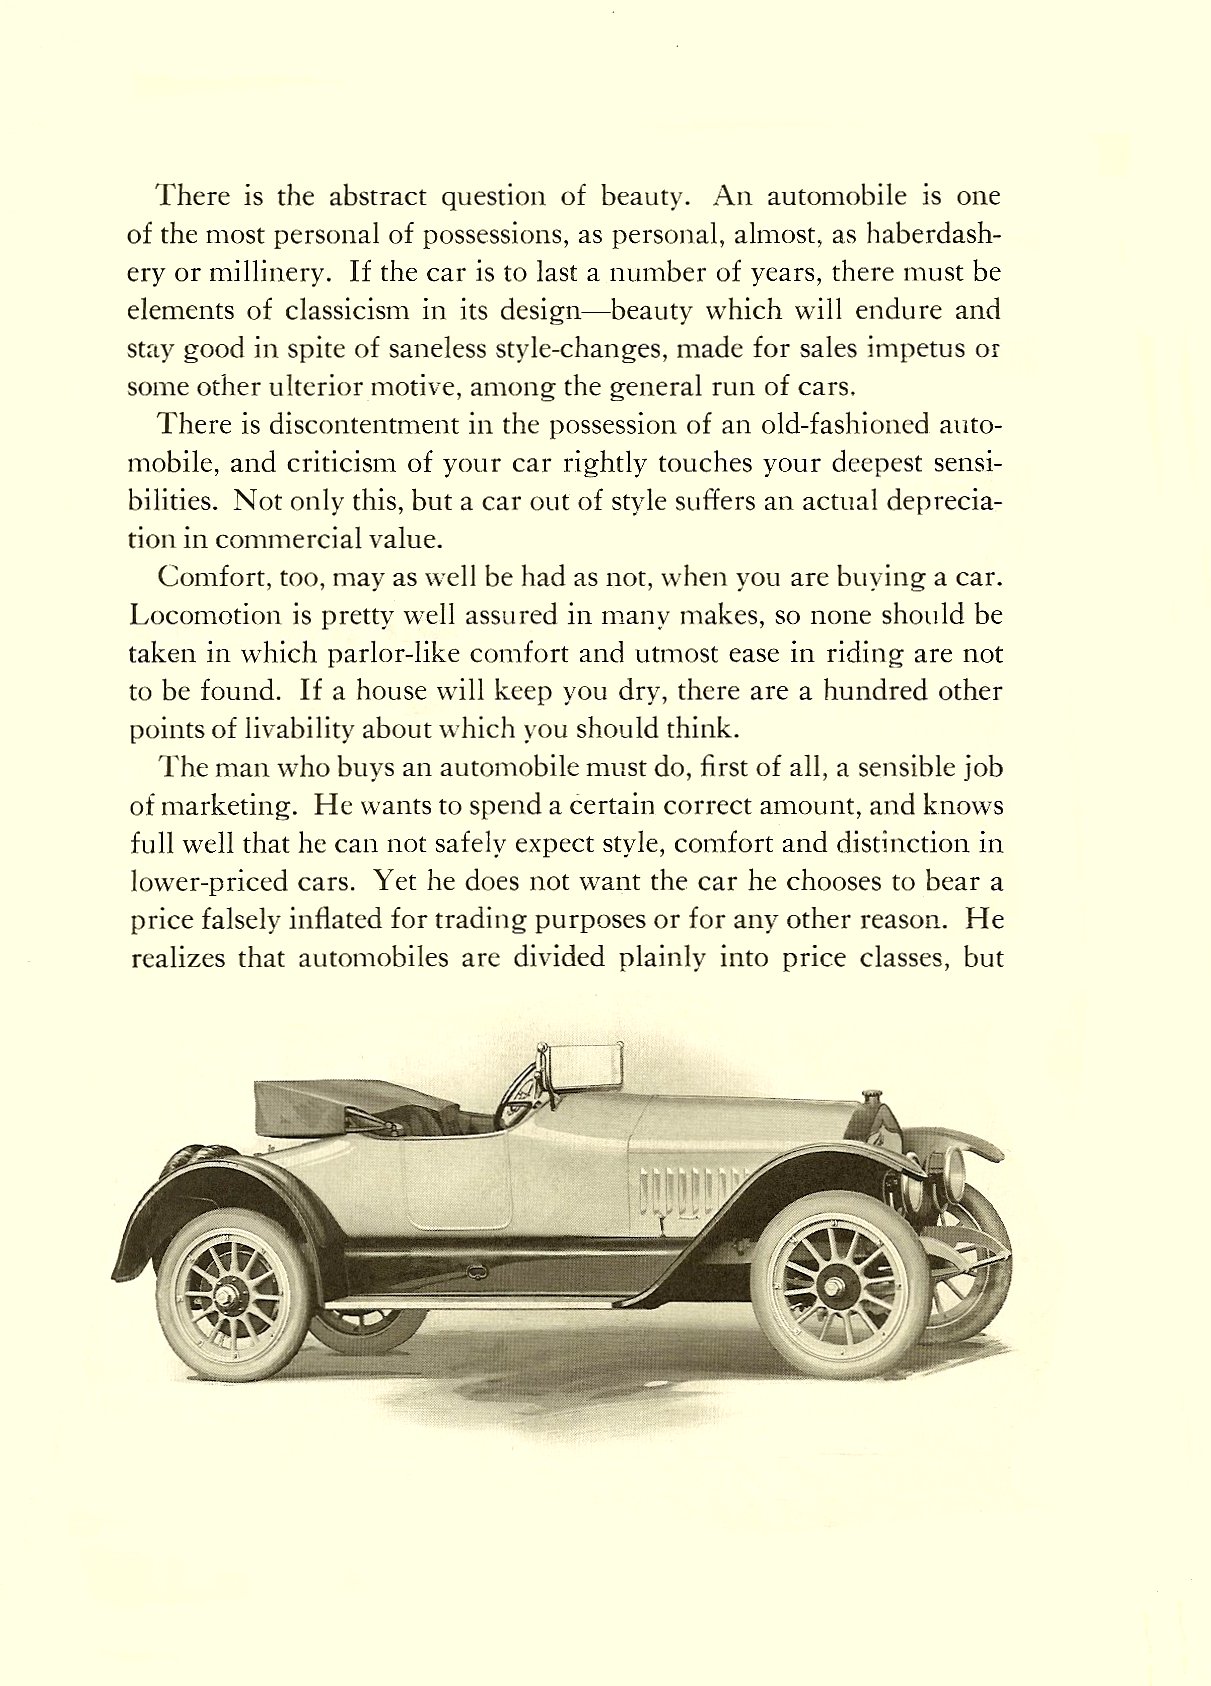 1915_National_Auto_Catalogue-07